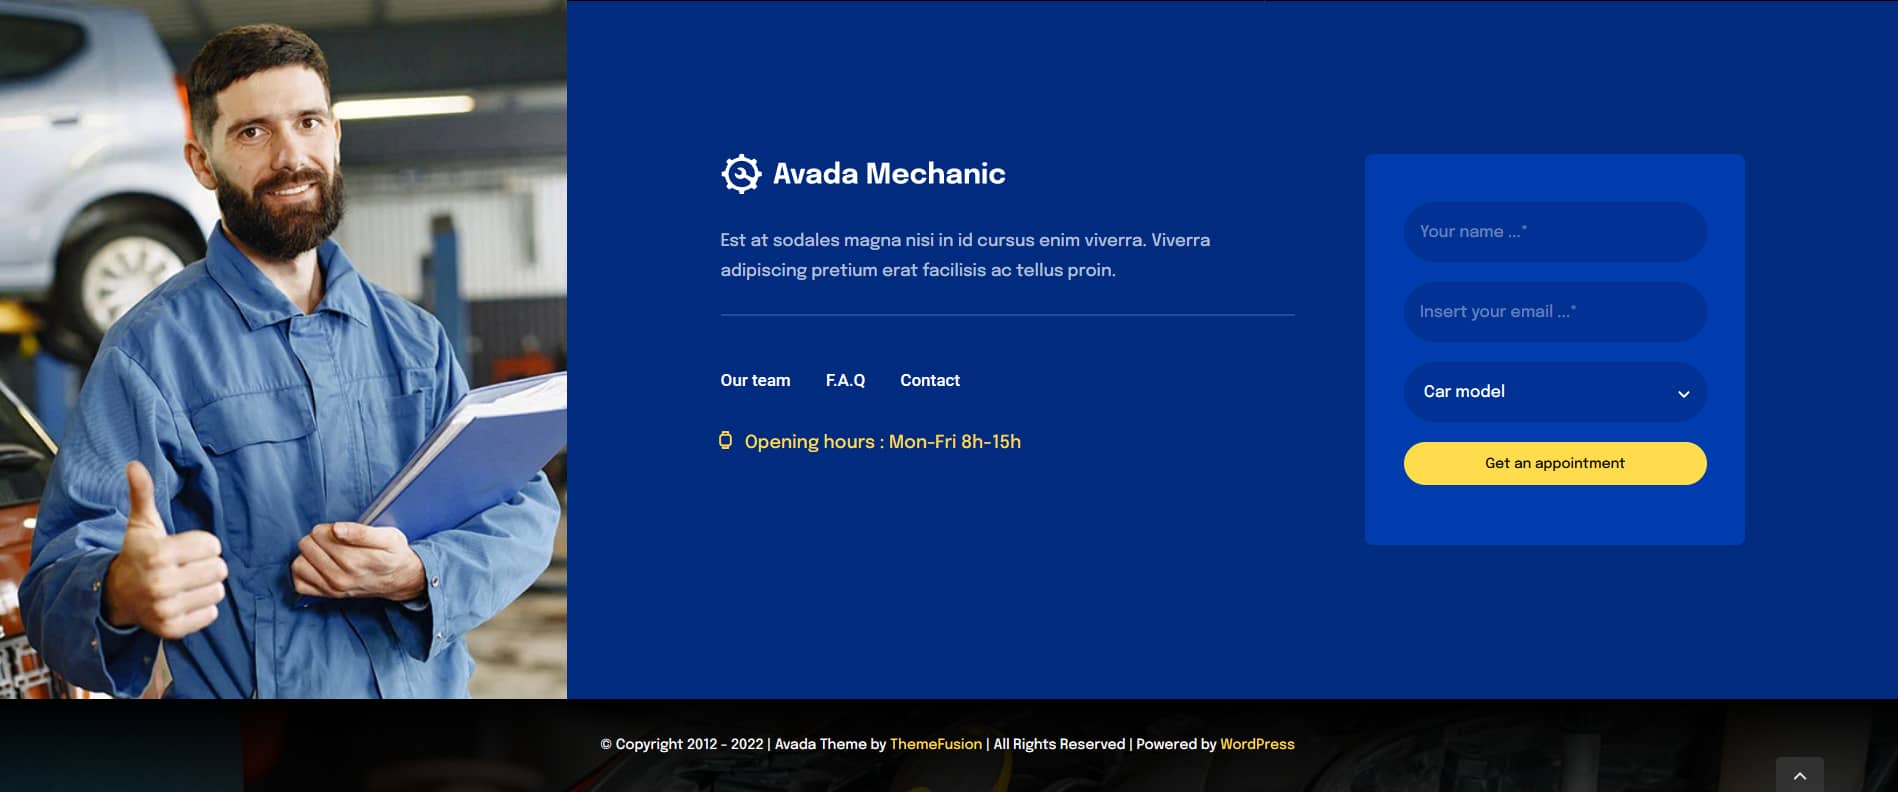 Avada Mechanic Footer